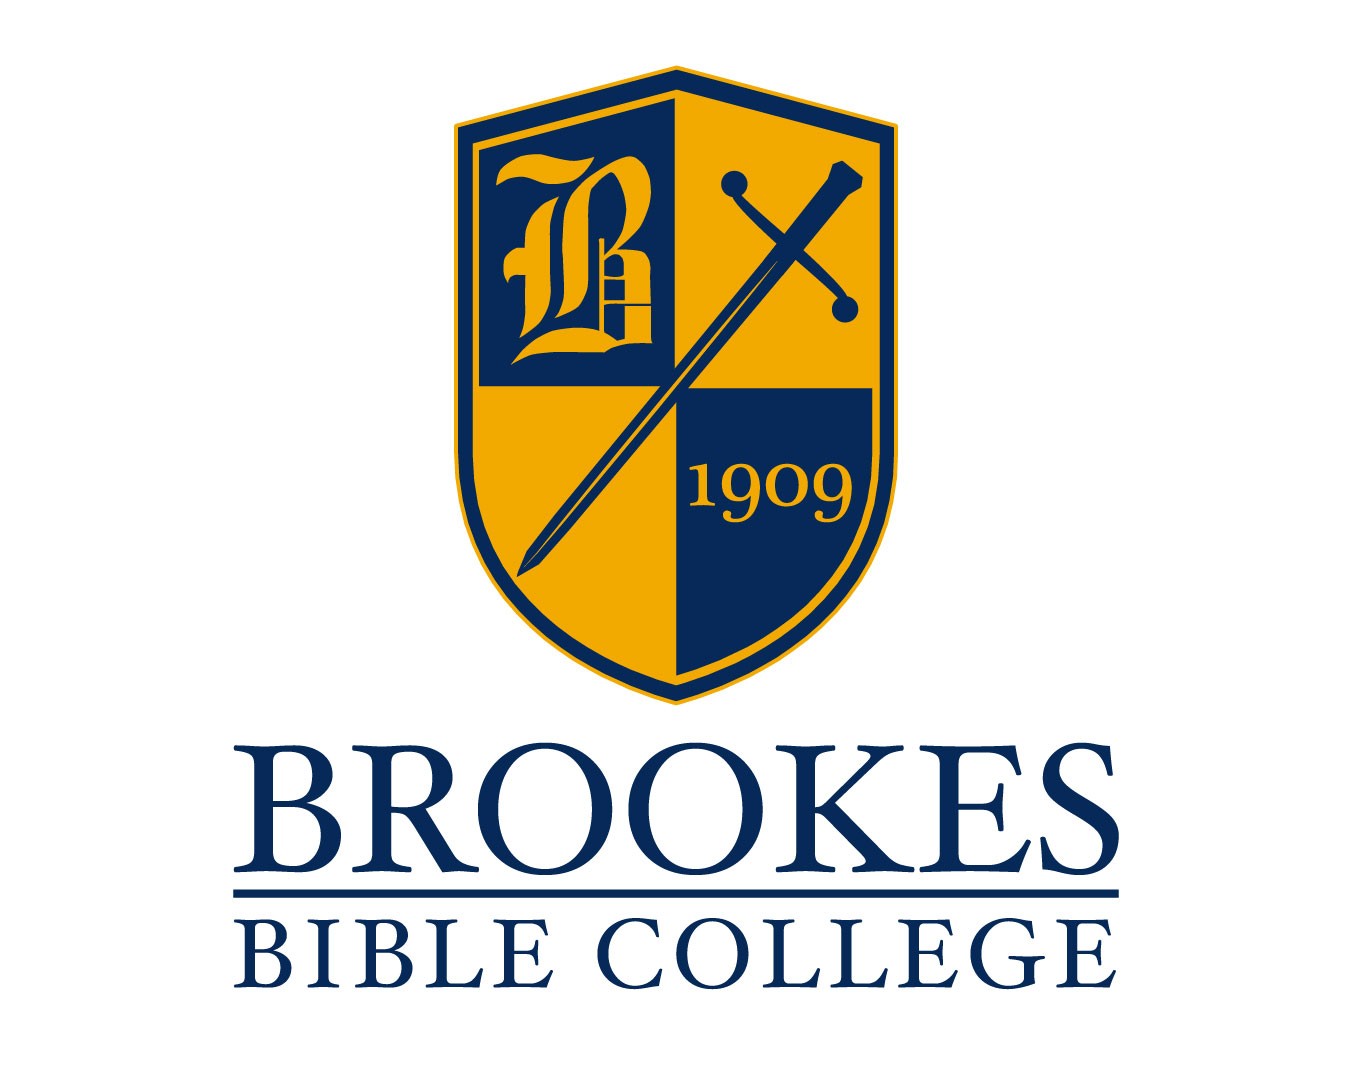 brookes bible college logo